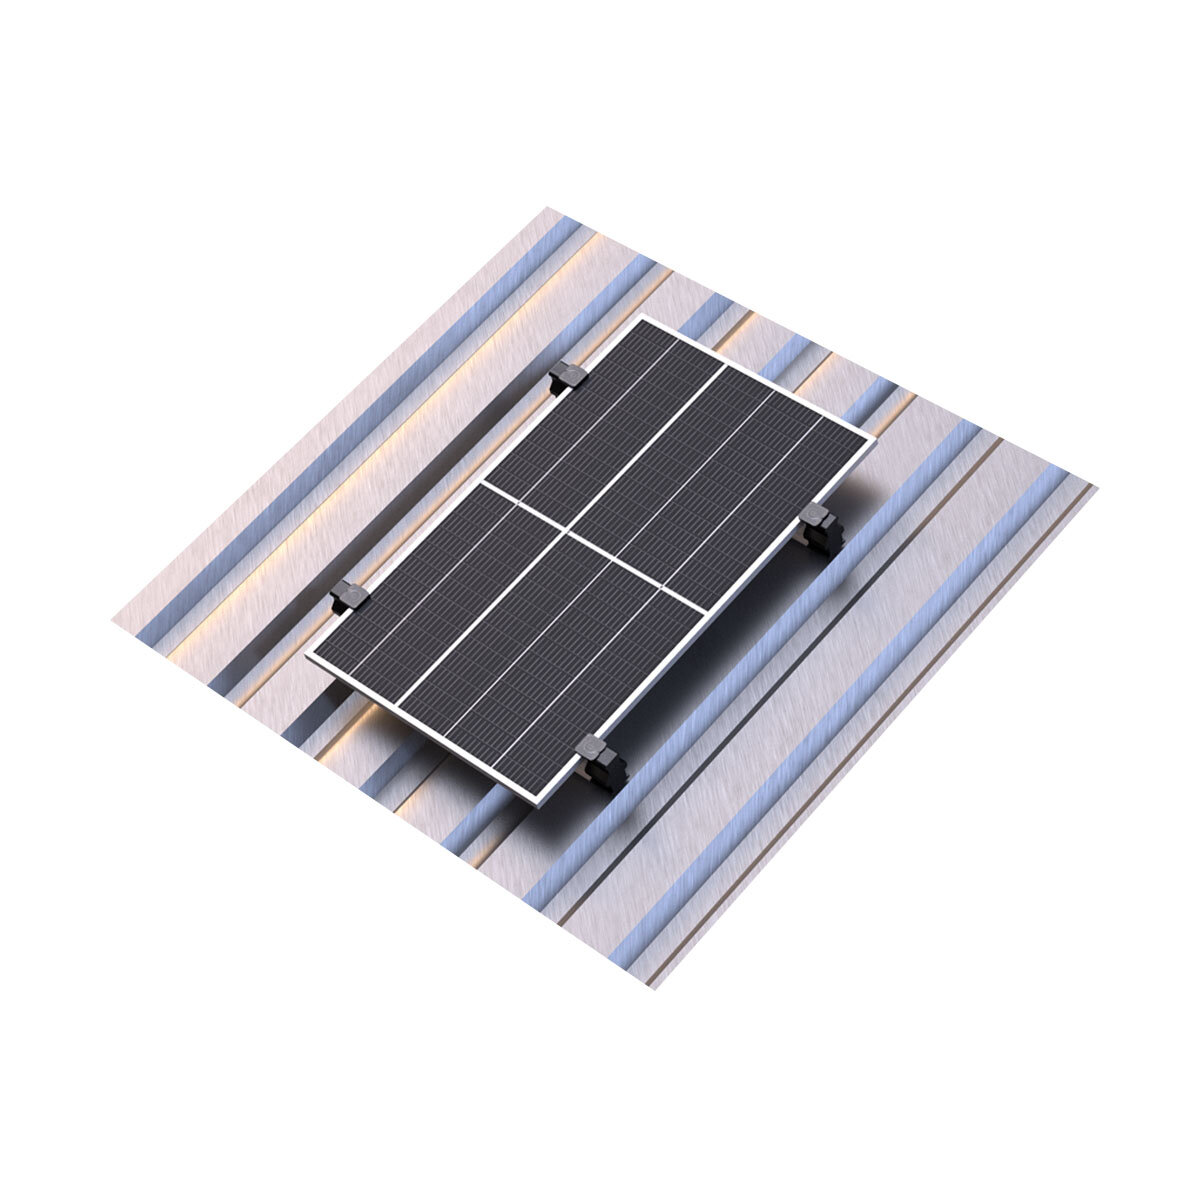 Plug &amp; Play Solarset - 1 paneel 400 Watt - Portait Staaldak